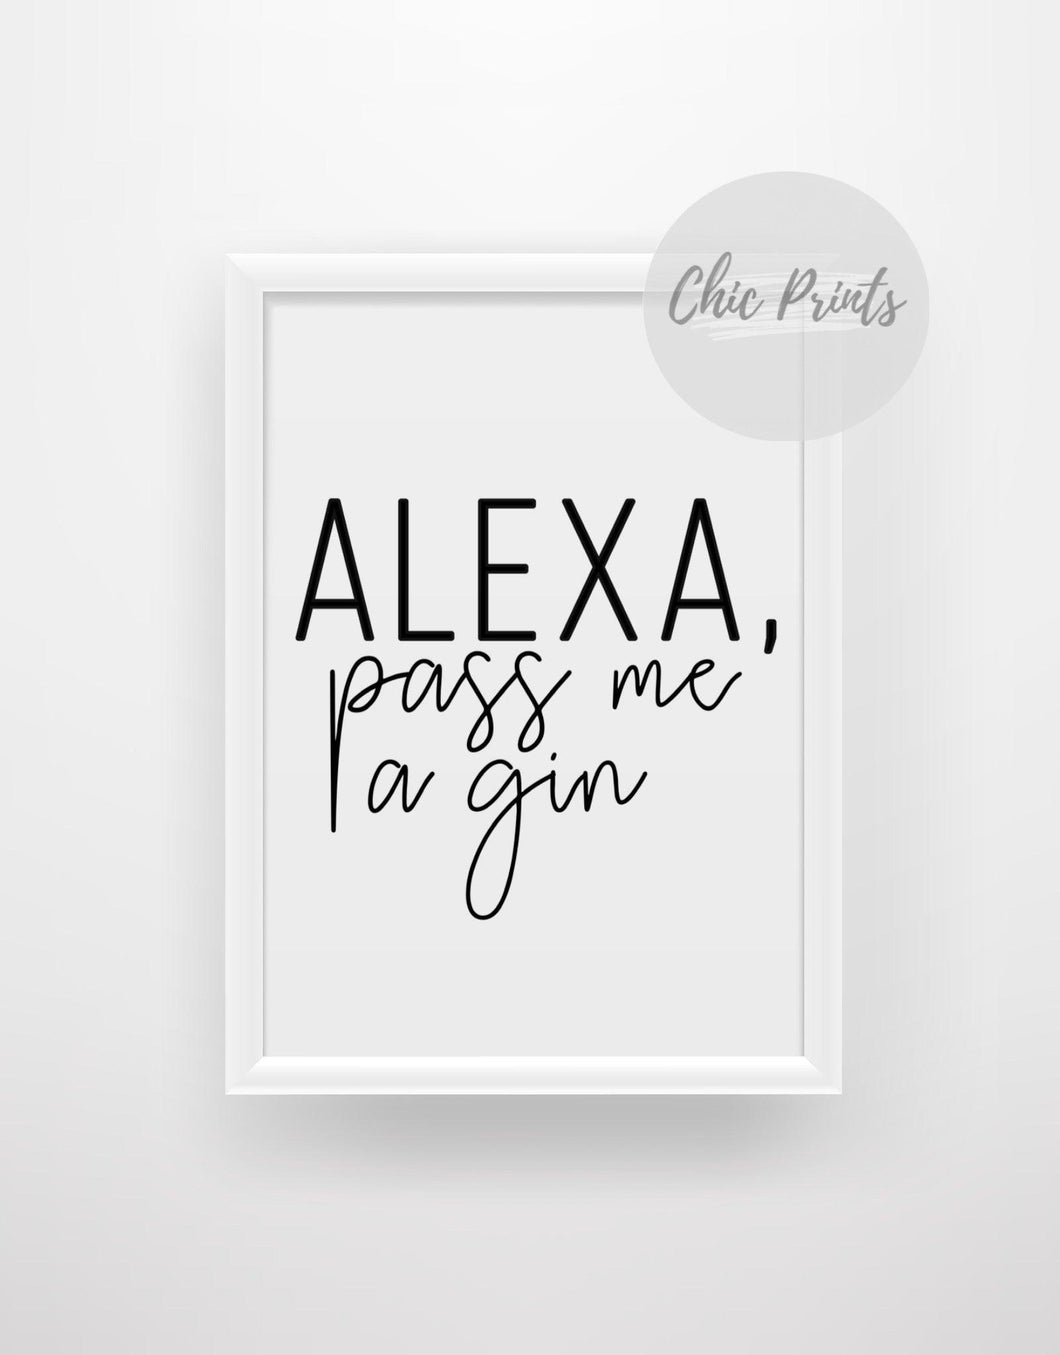 Alexa, pass me a gin - Quote Print - Chic Prints